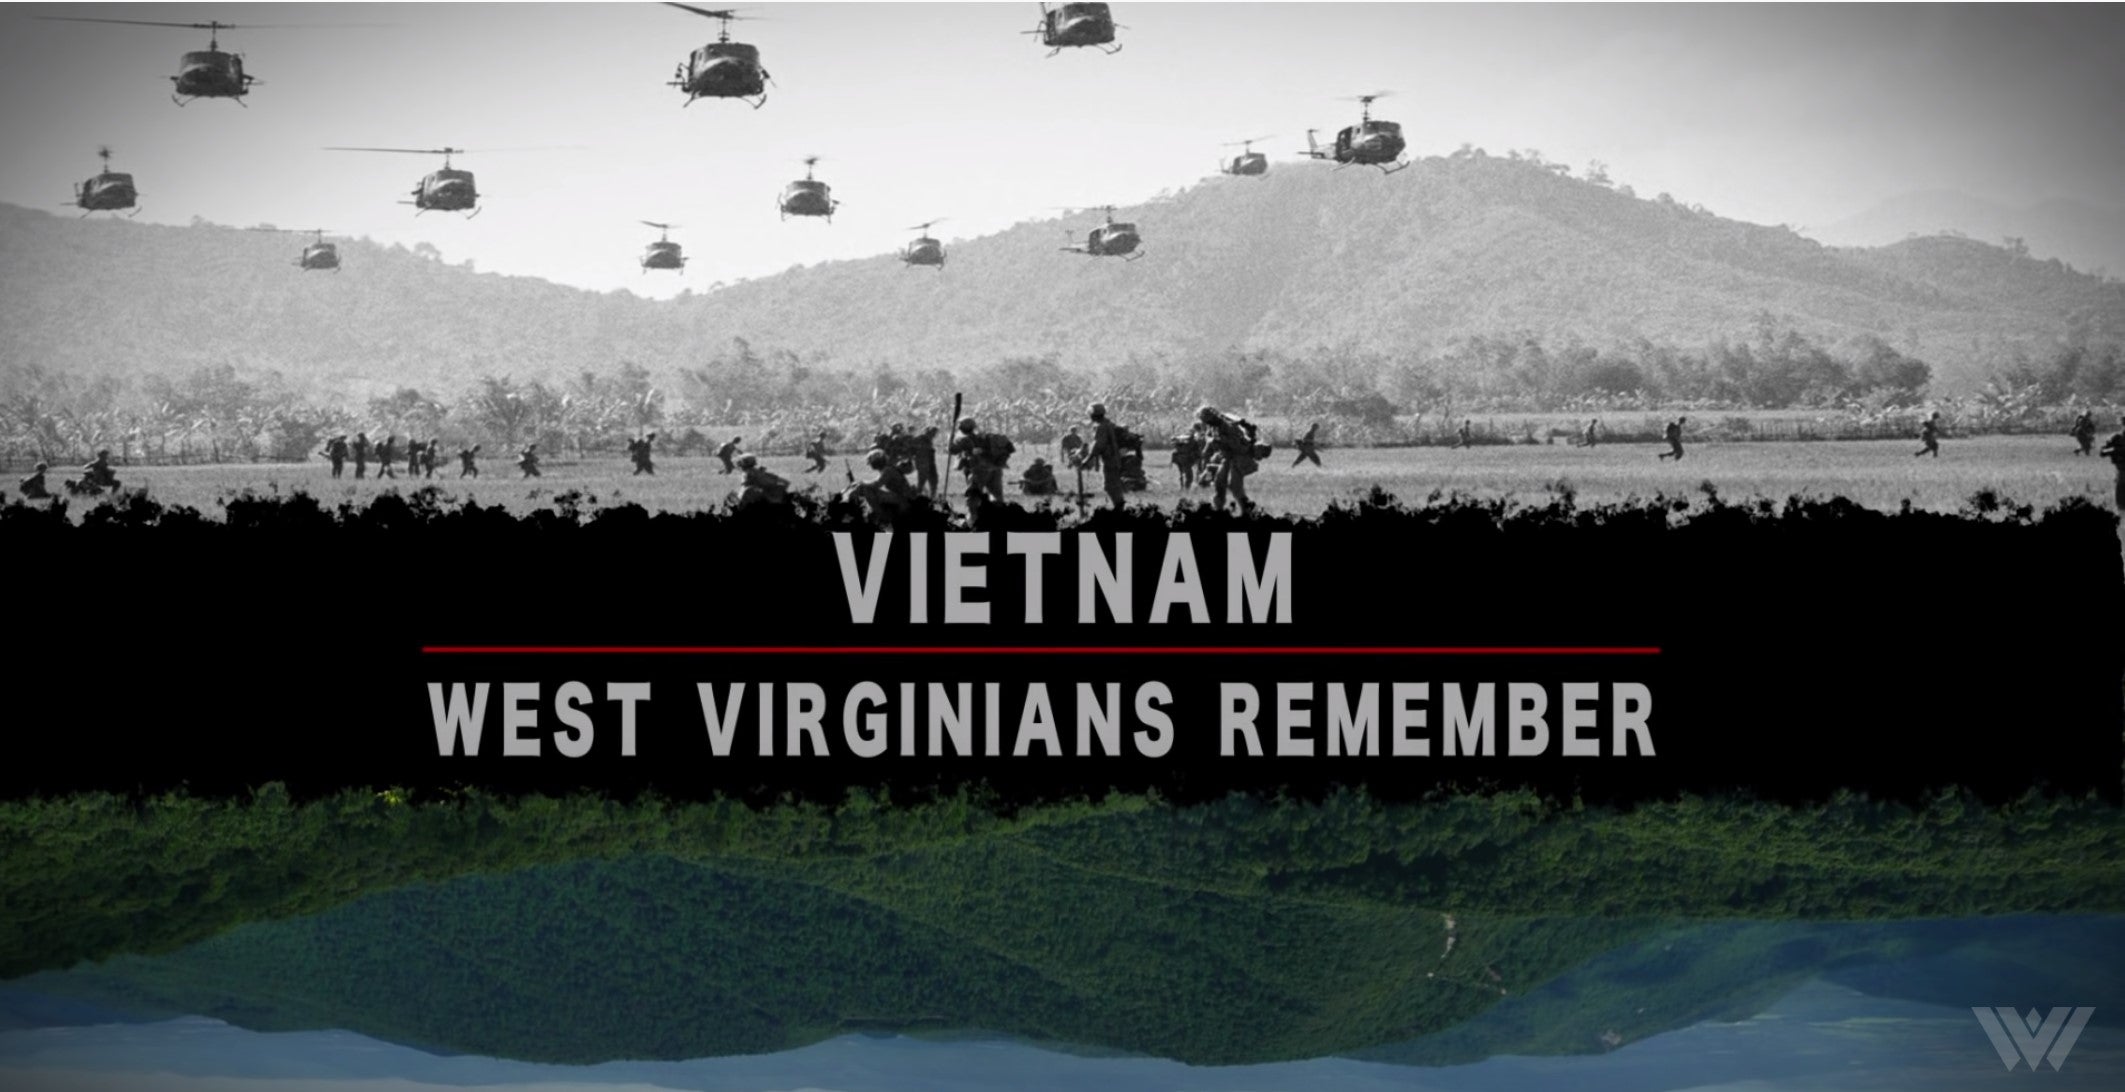 www.wearethemighty.com: West Virginia veterans remember Vietnam